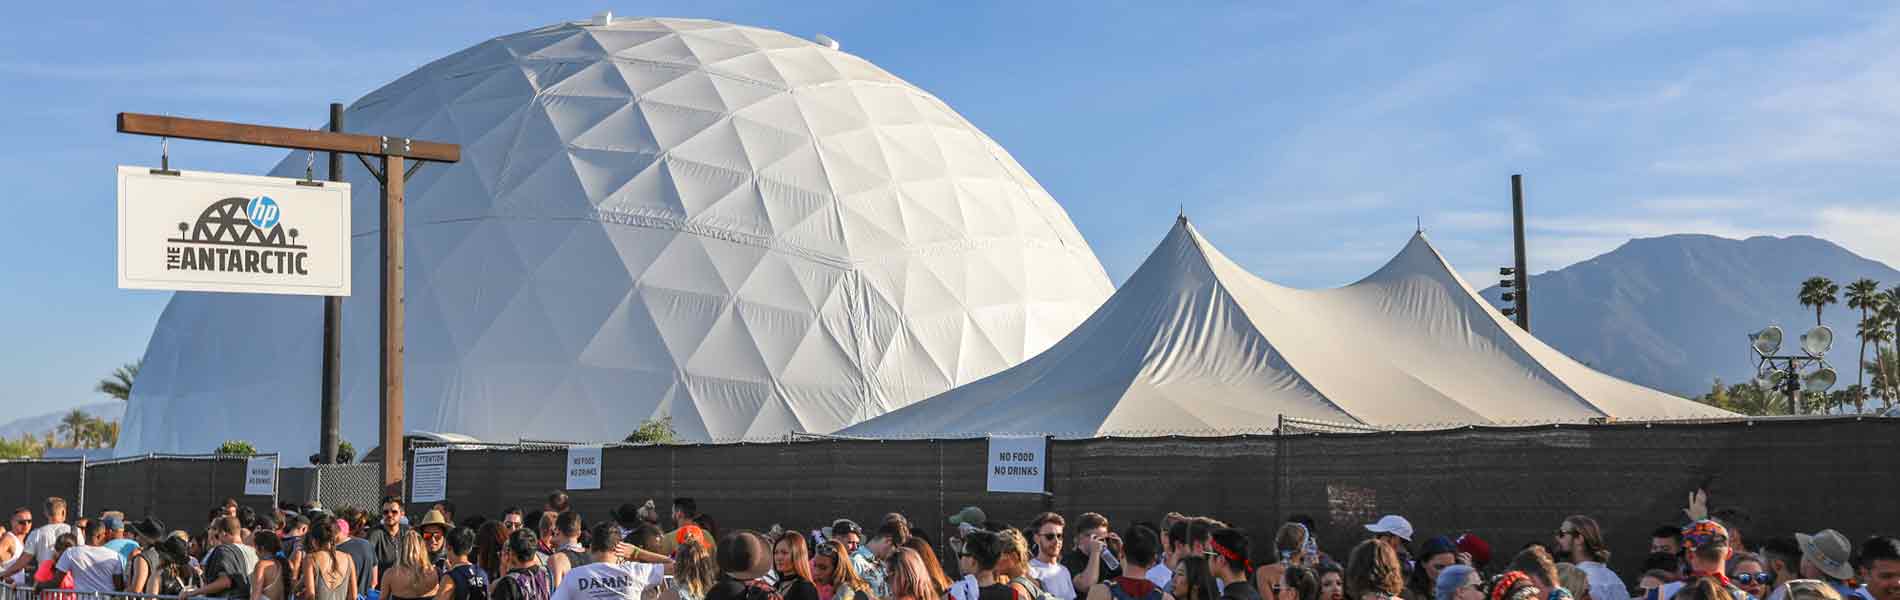 120ft Coachella Projection Dome